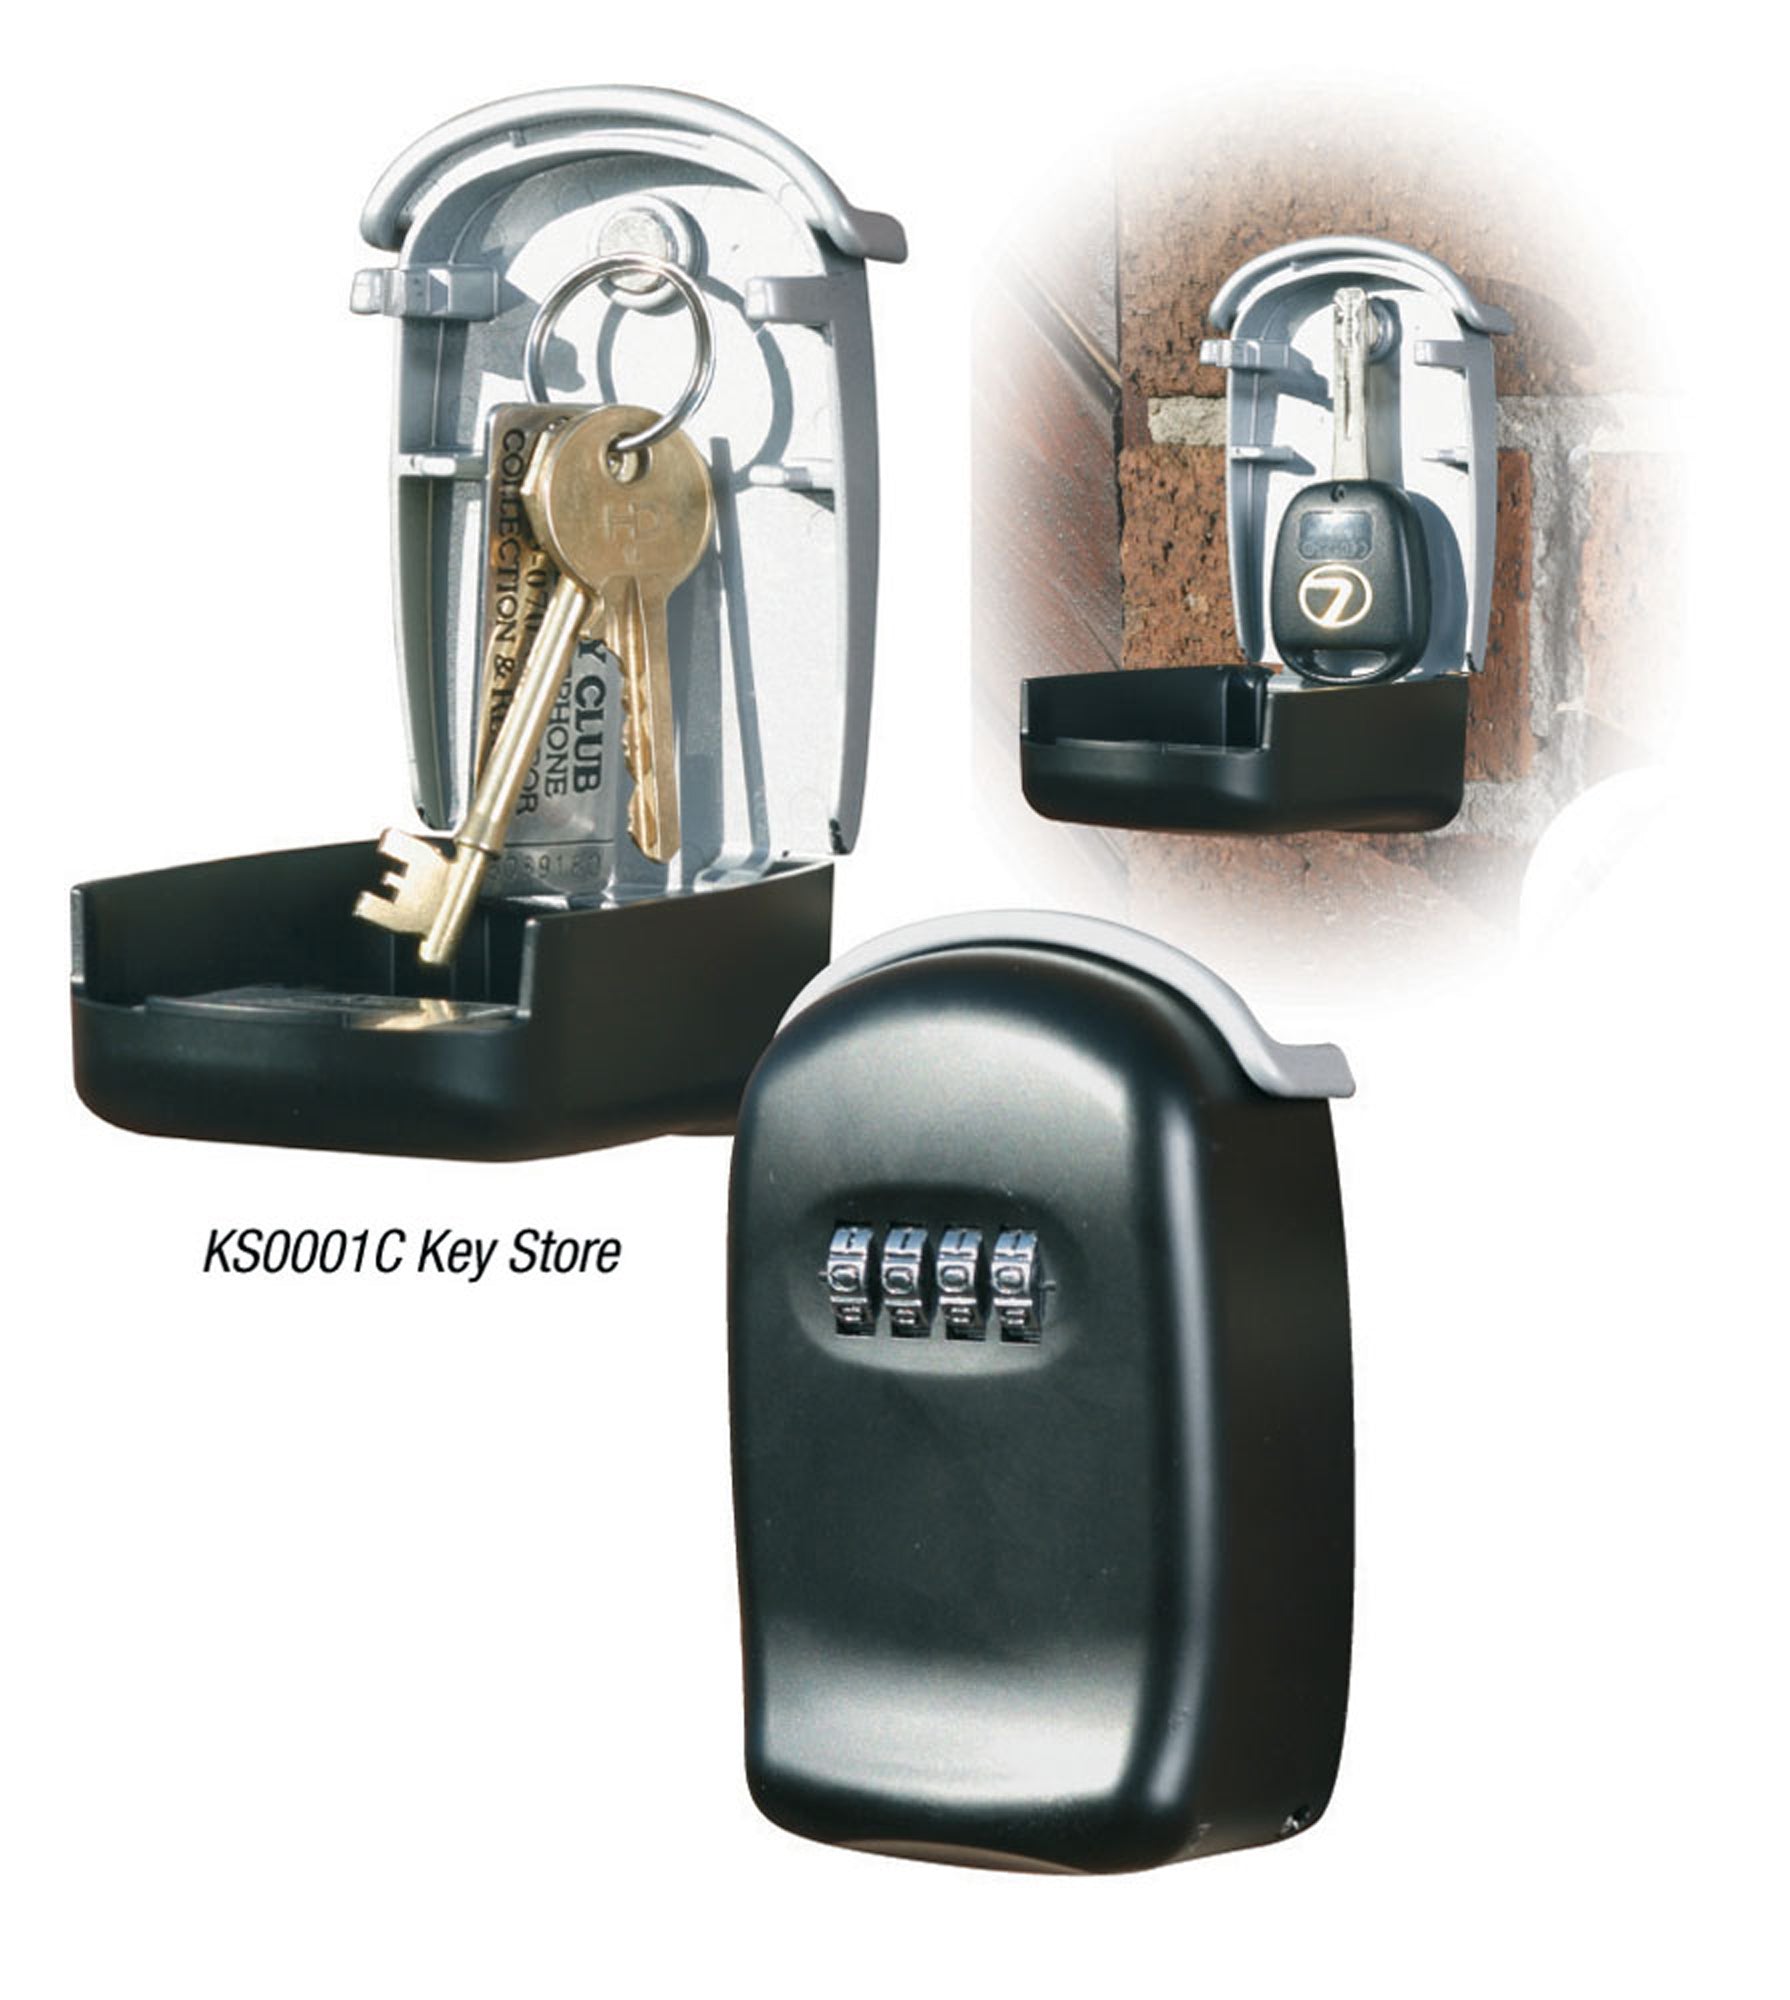 Phoenix Key Store Key Safe